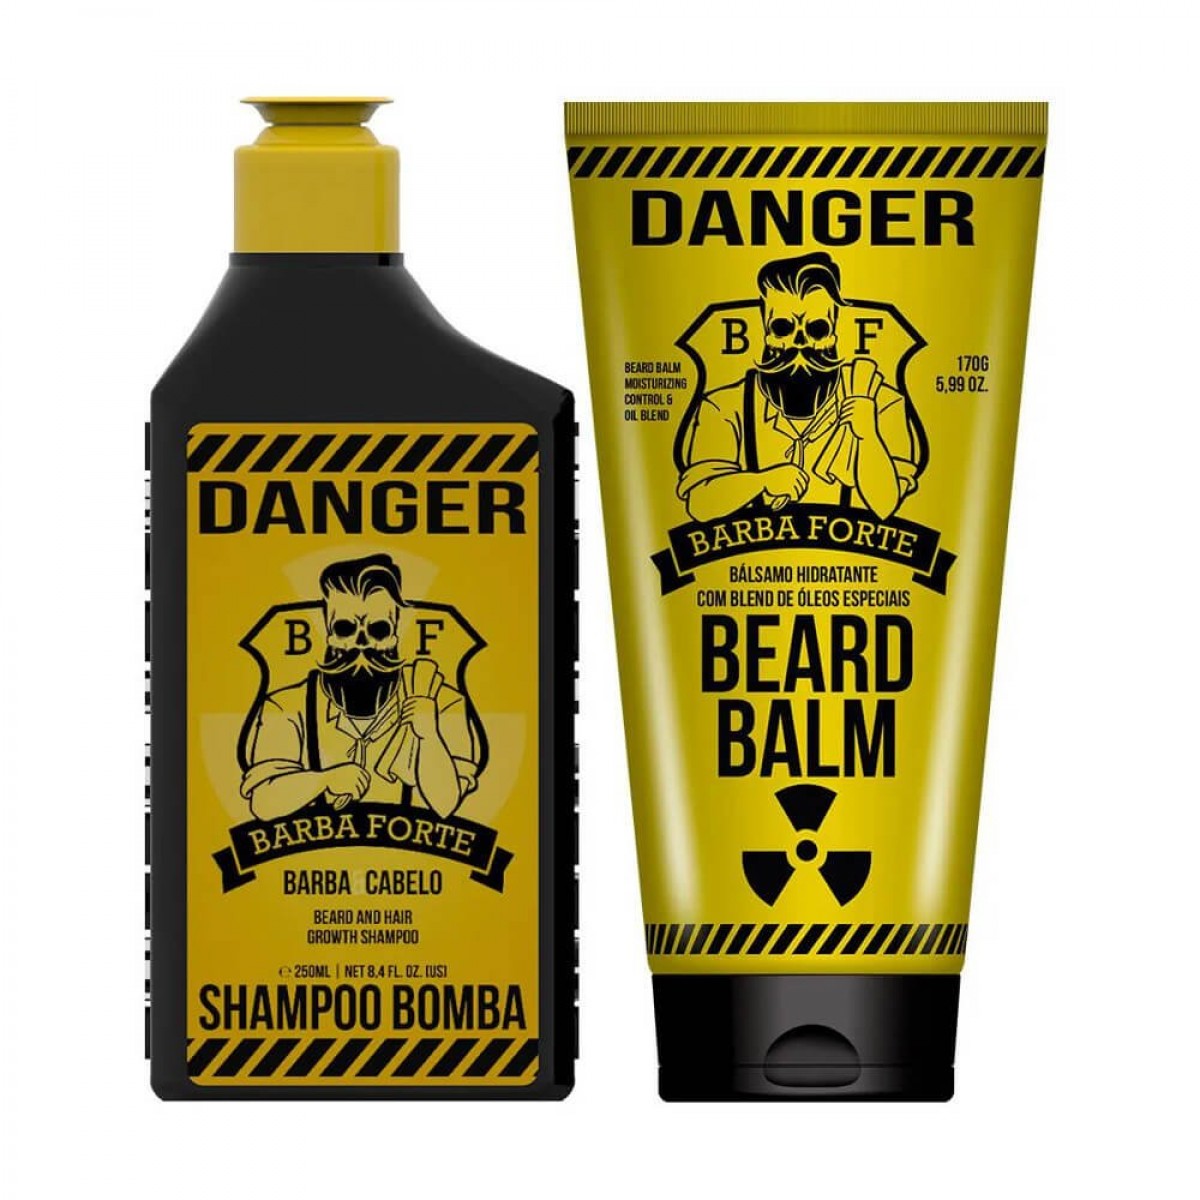 shampoo balm barba